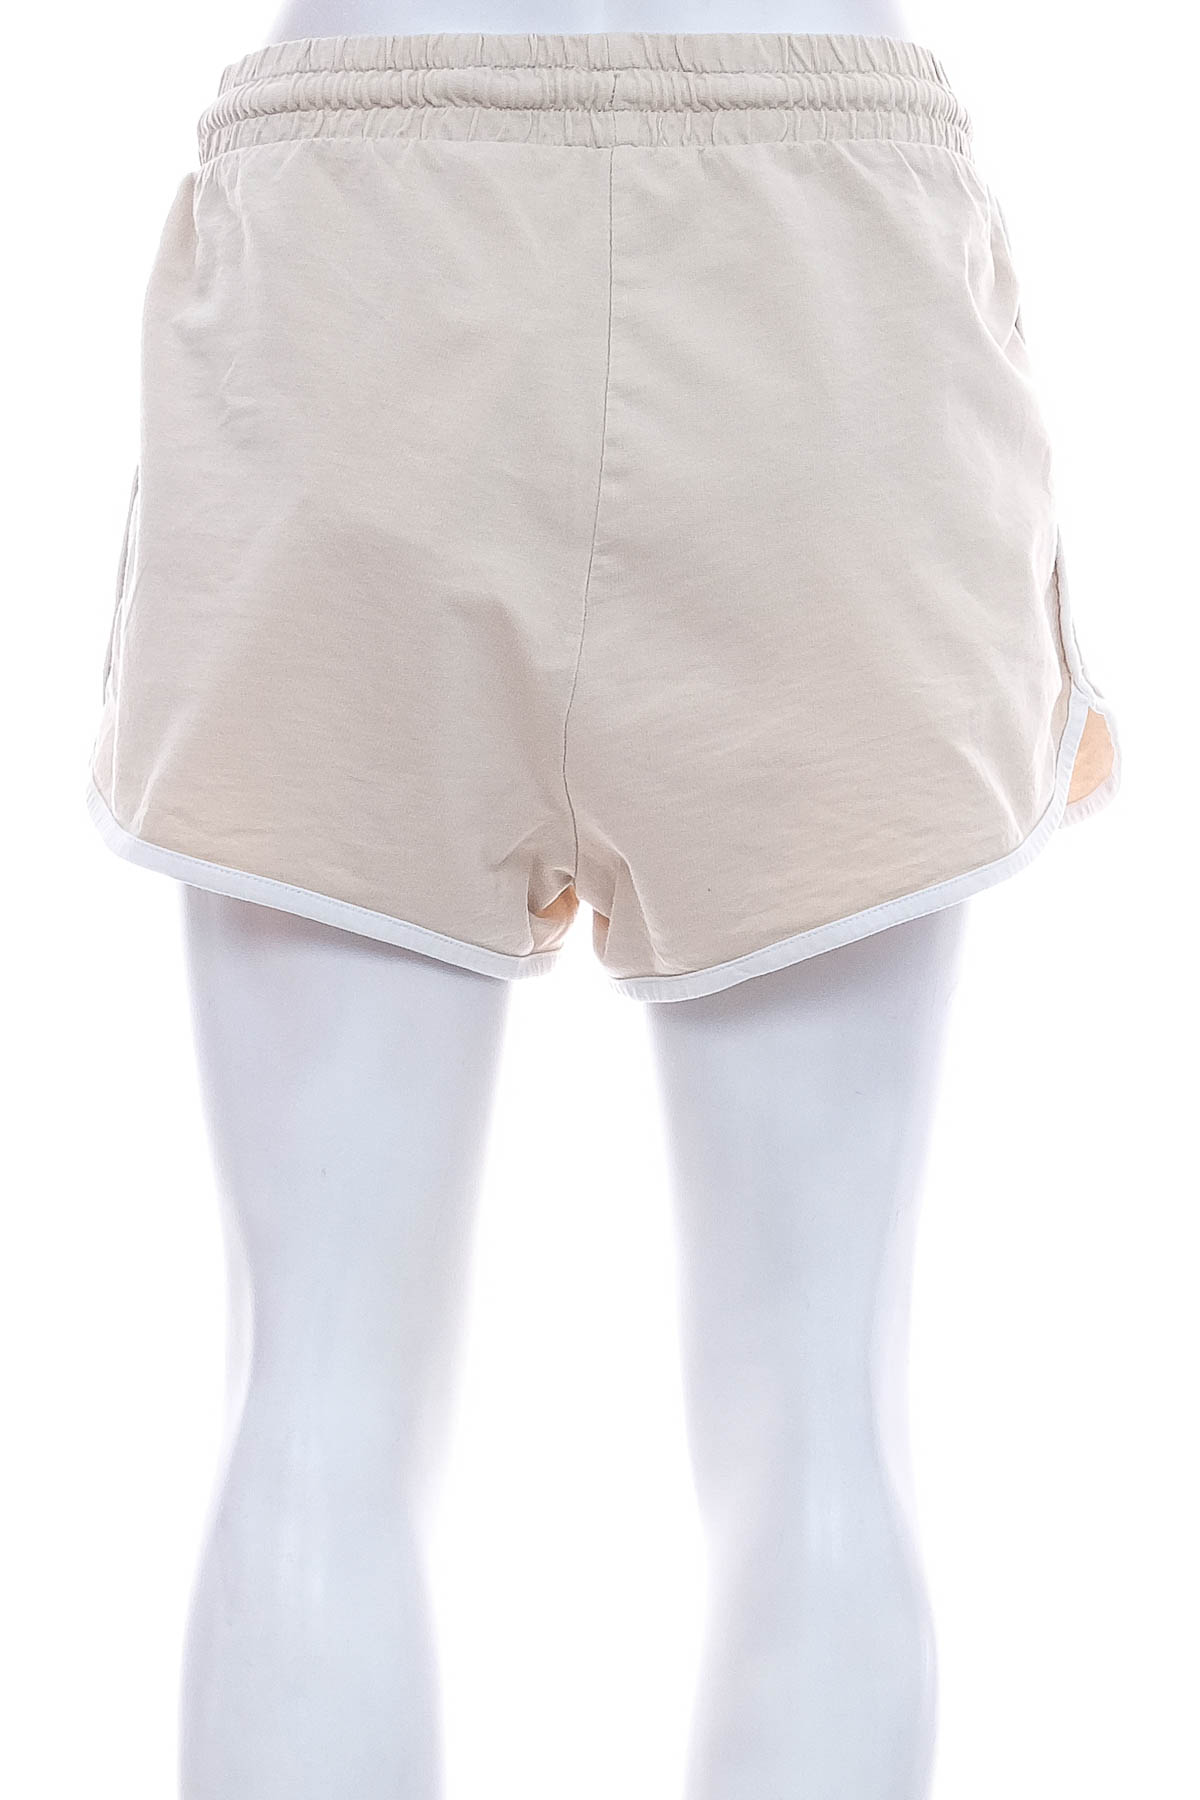 Female shorts - MONKI - 1